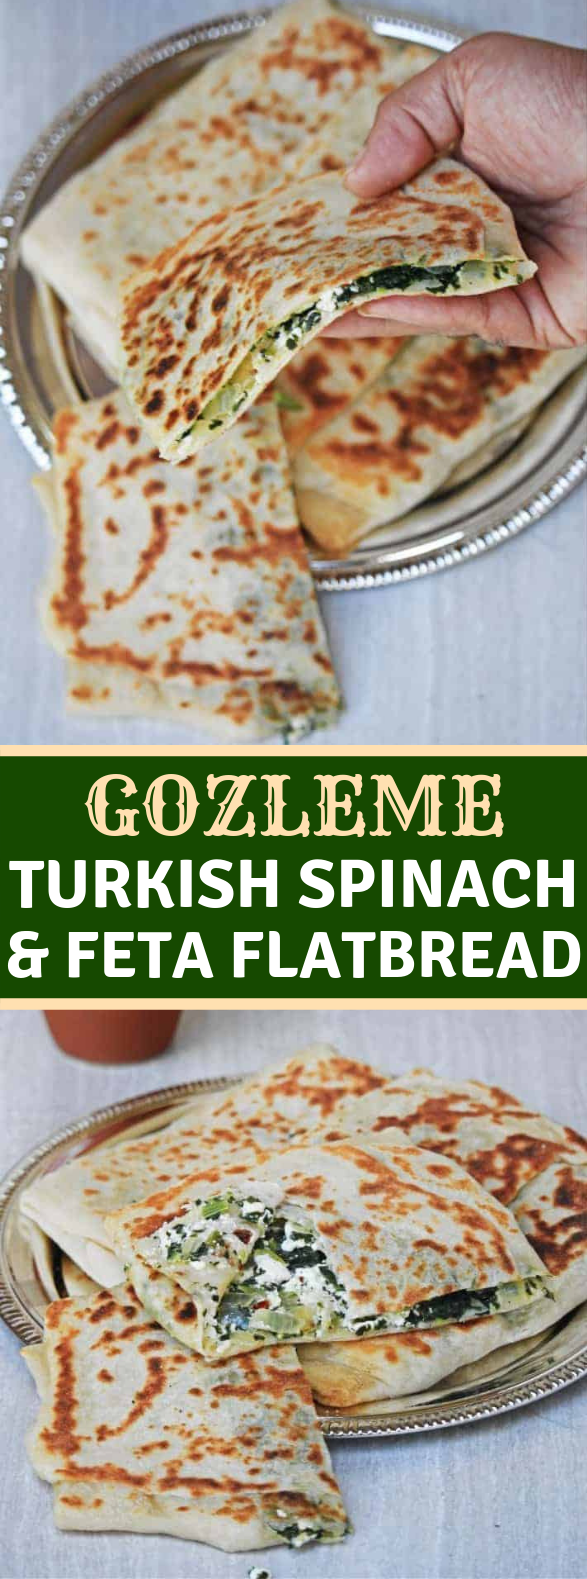 Gozleme | Turkish Spinach and Feta Flatbread #vegetarian #food